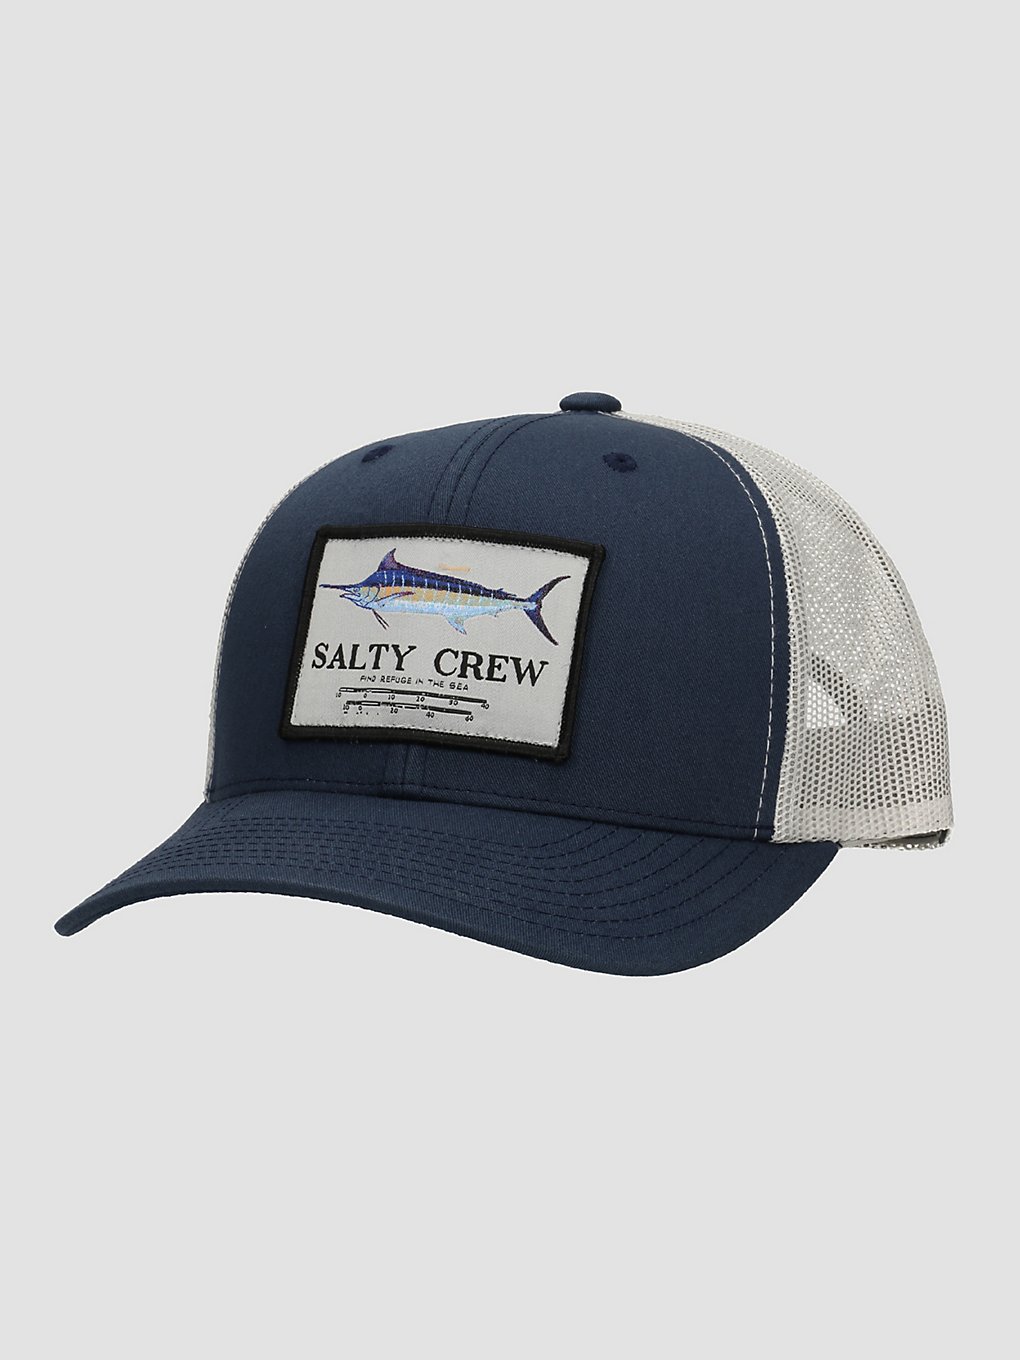 Salty Crew Marlin Mount Retro Trucker petje blauw